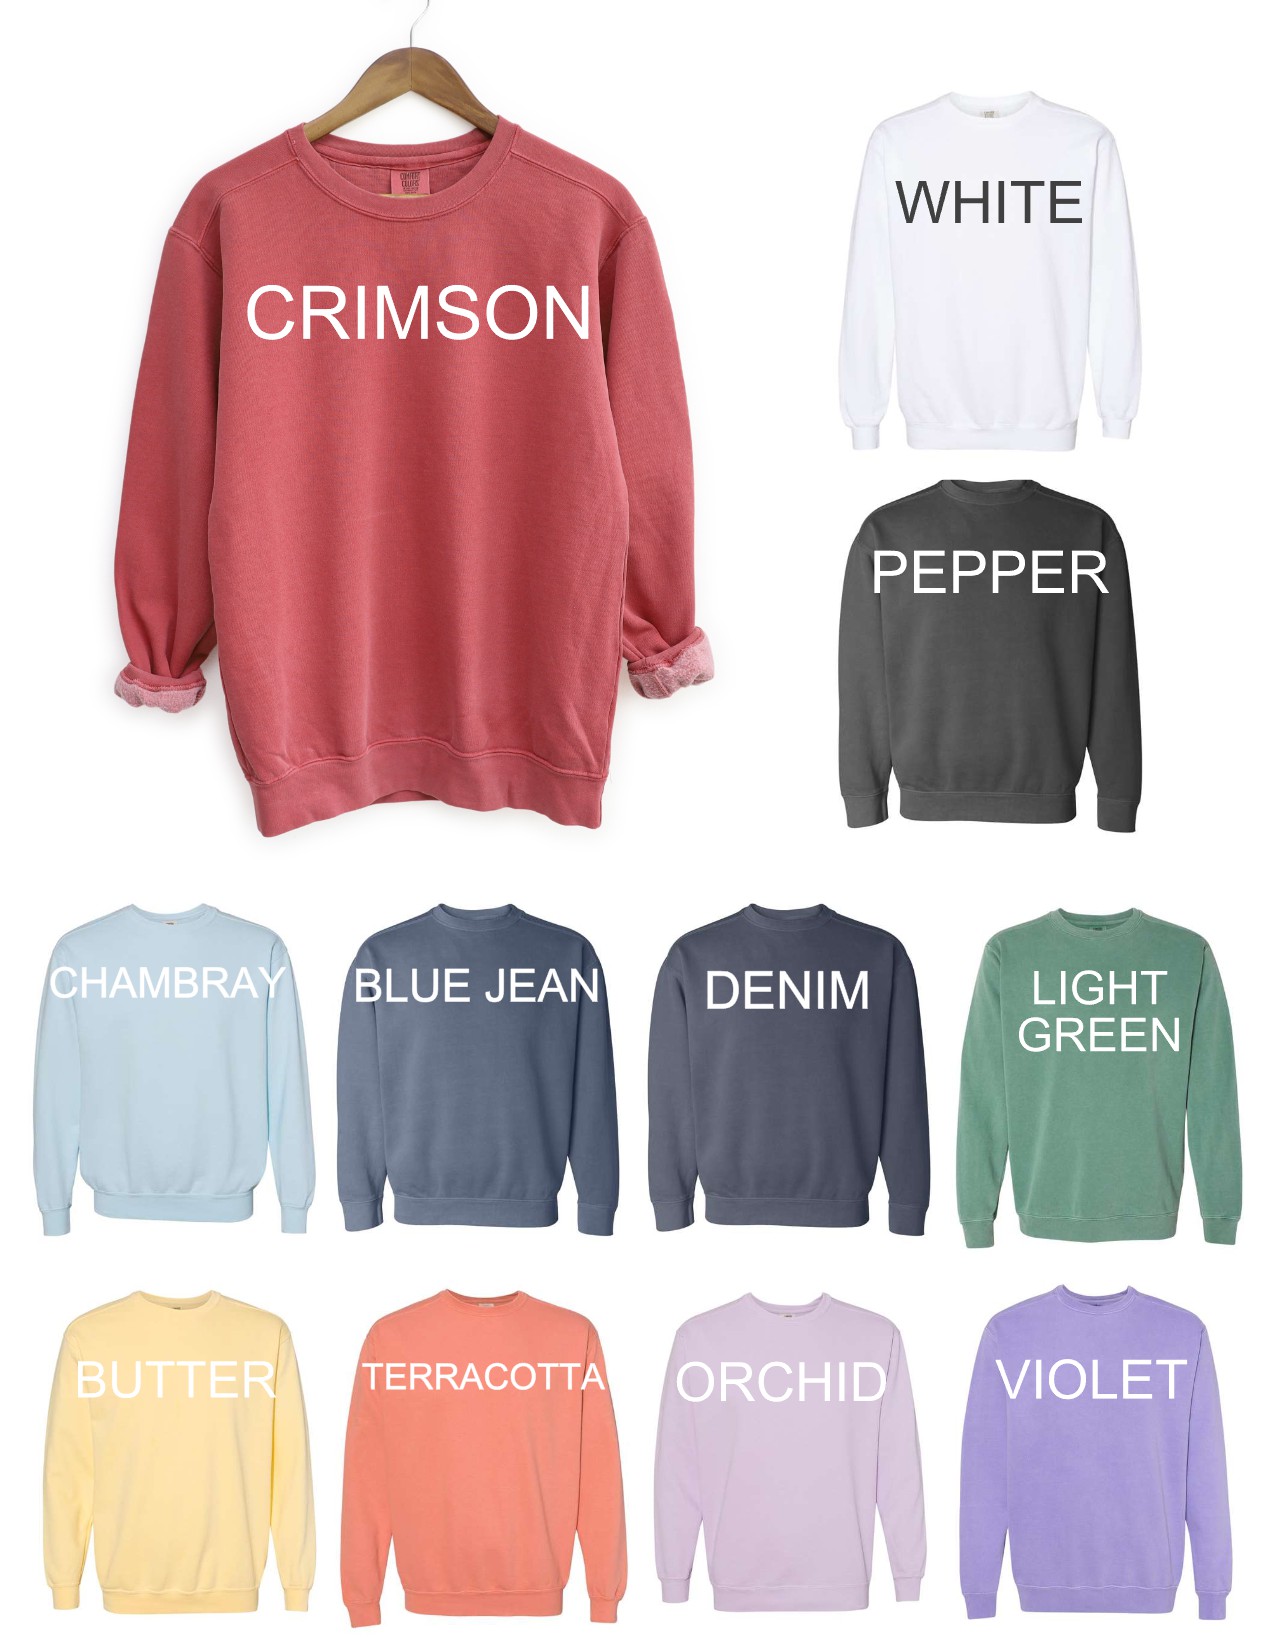 Arched 'SENIOR' 2024 - Comfort Colors Sweatshirt - YOU CHOOSE Color